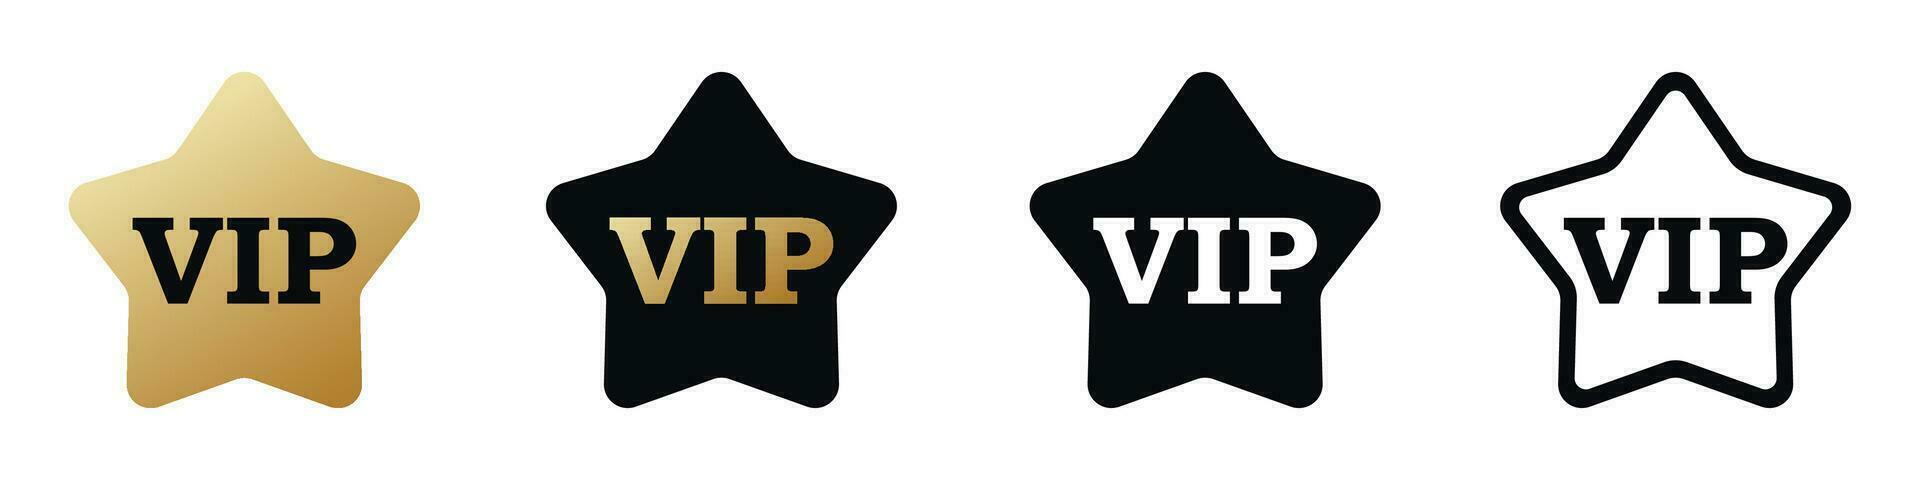 vip Star Symbol. v ich p Mitglied Abzeichen. vektor